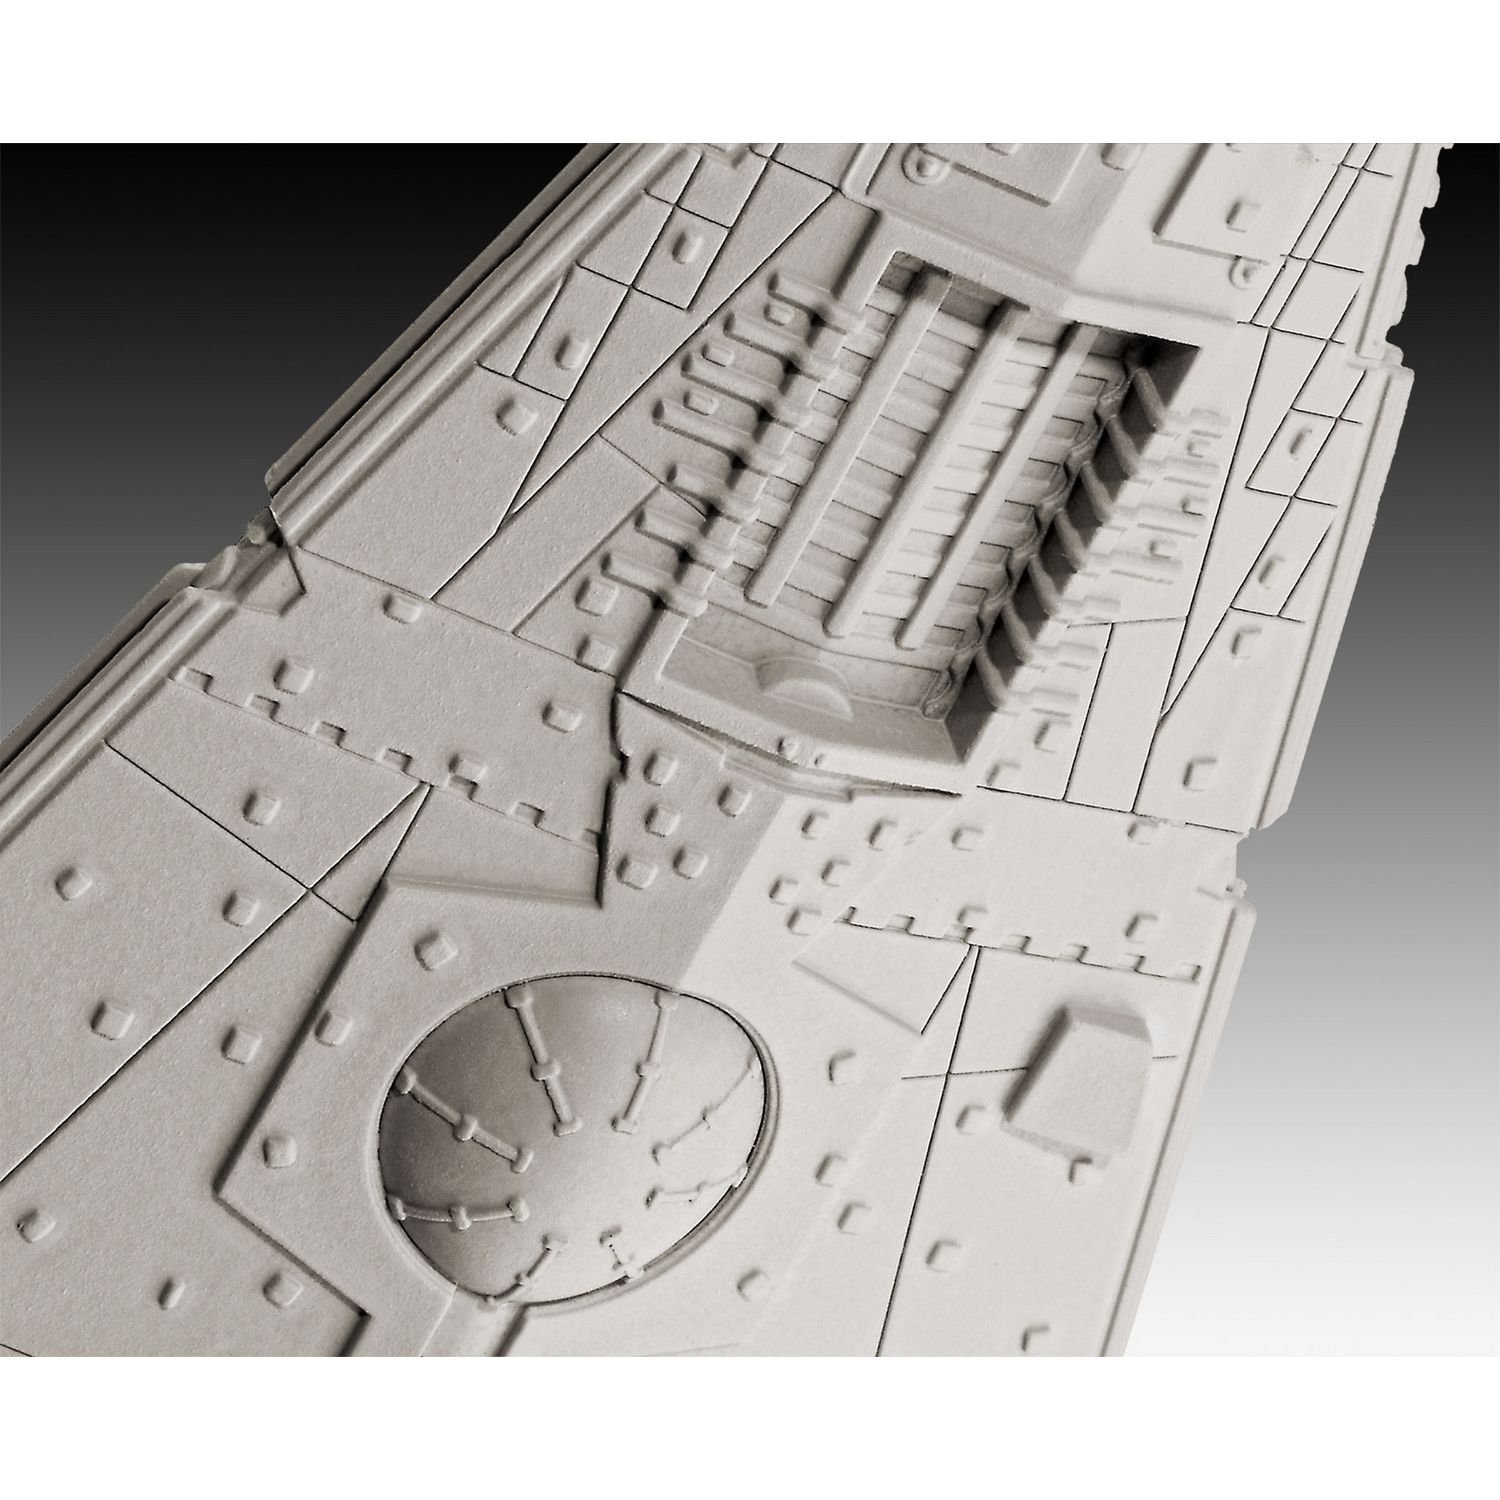 Збірна модель Revell Космічний корабель Imperial Star Destroyer, рівень 3, масштаб 1:12300, 21 деталь (RVL-03609) - фото 4